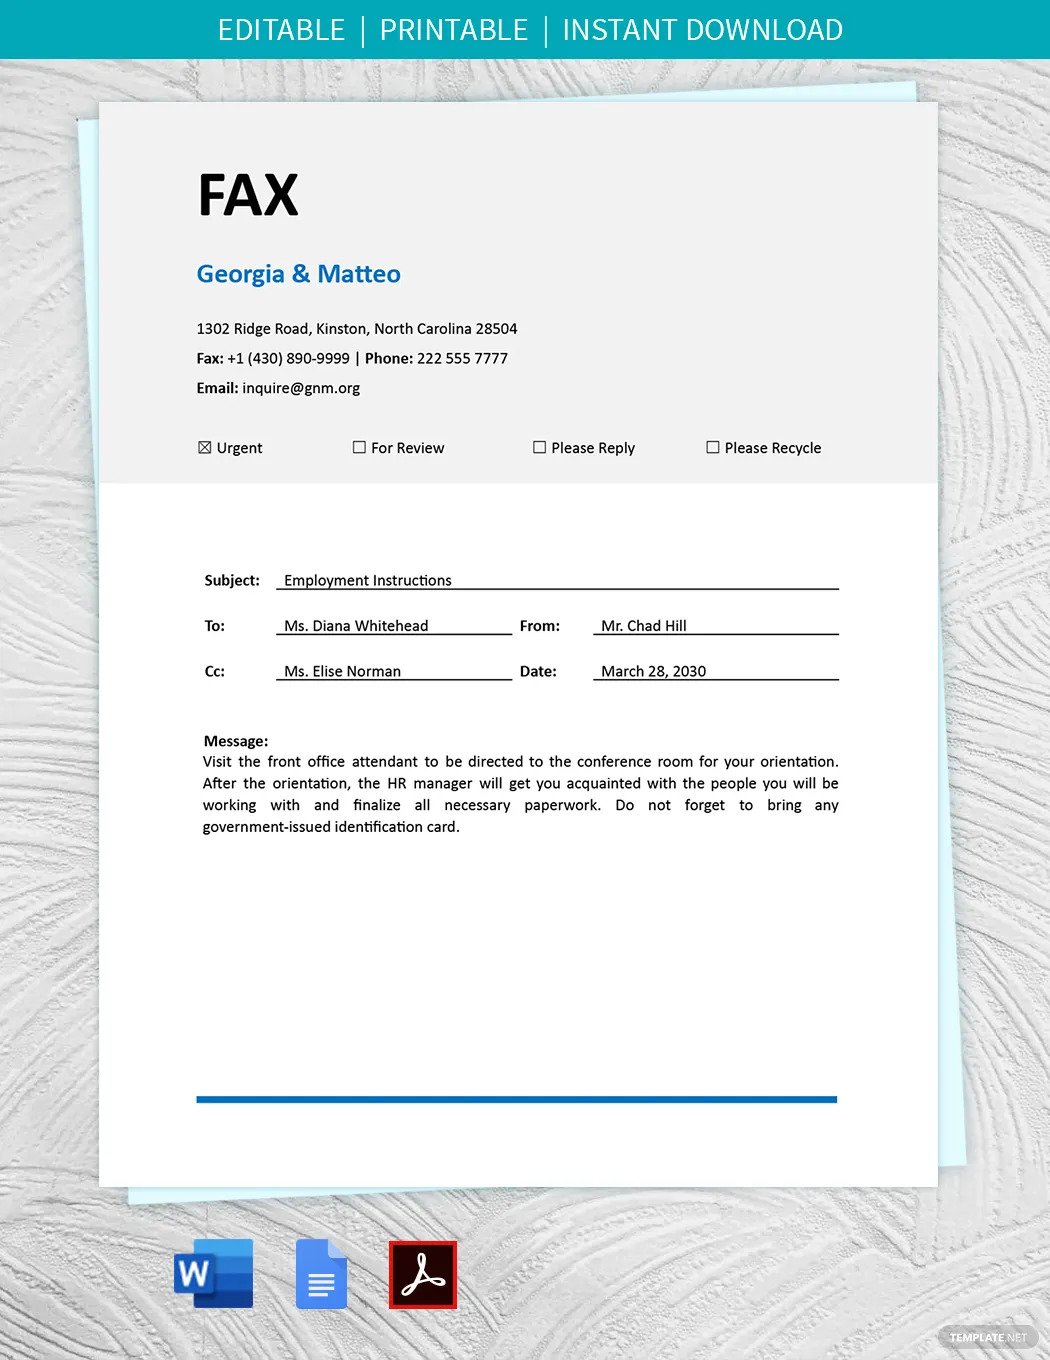 job fax cover sheet